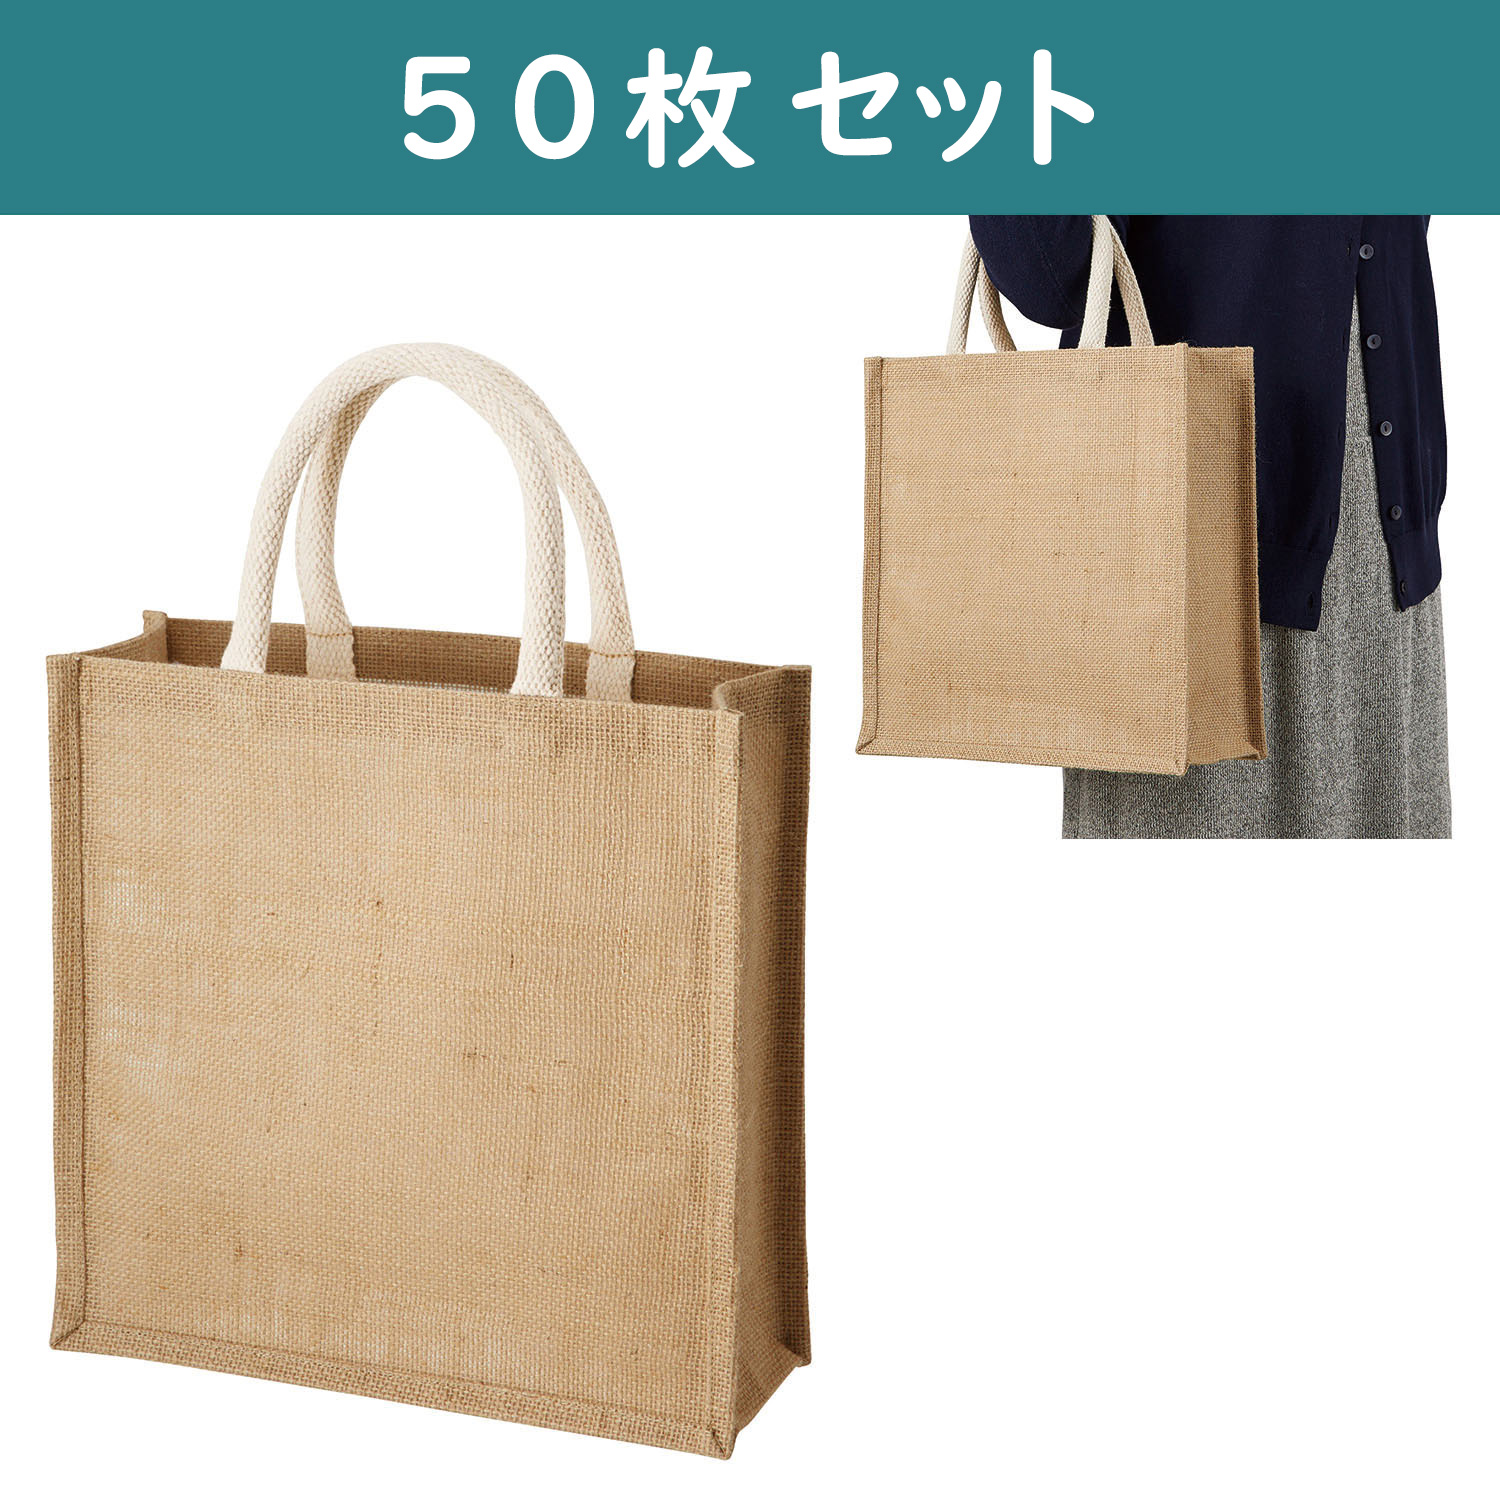 ES318-50 Jute Square bag Natural beige (Medium size) 50pcs set (set)